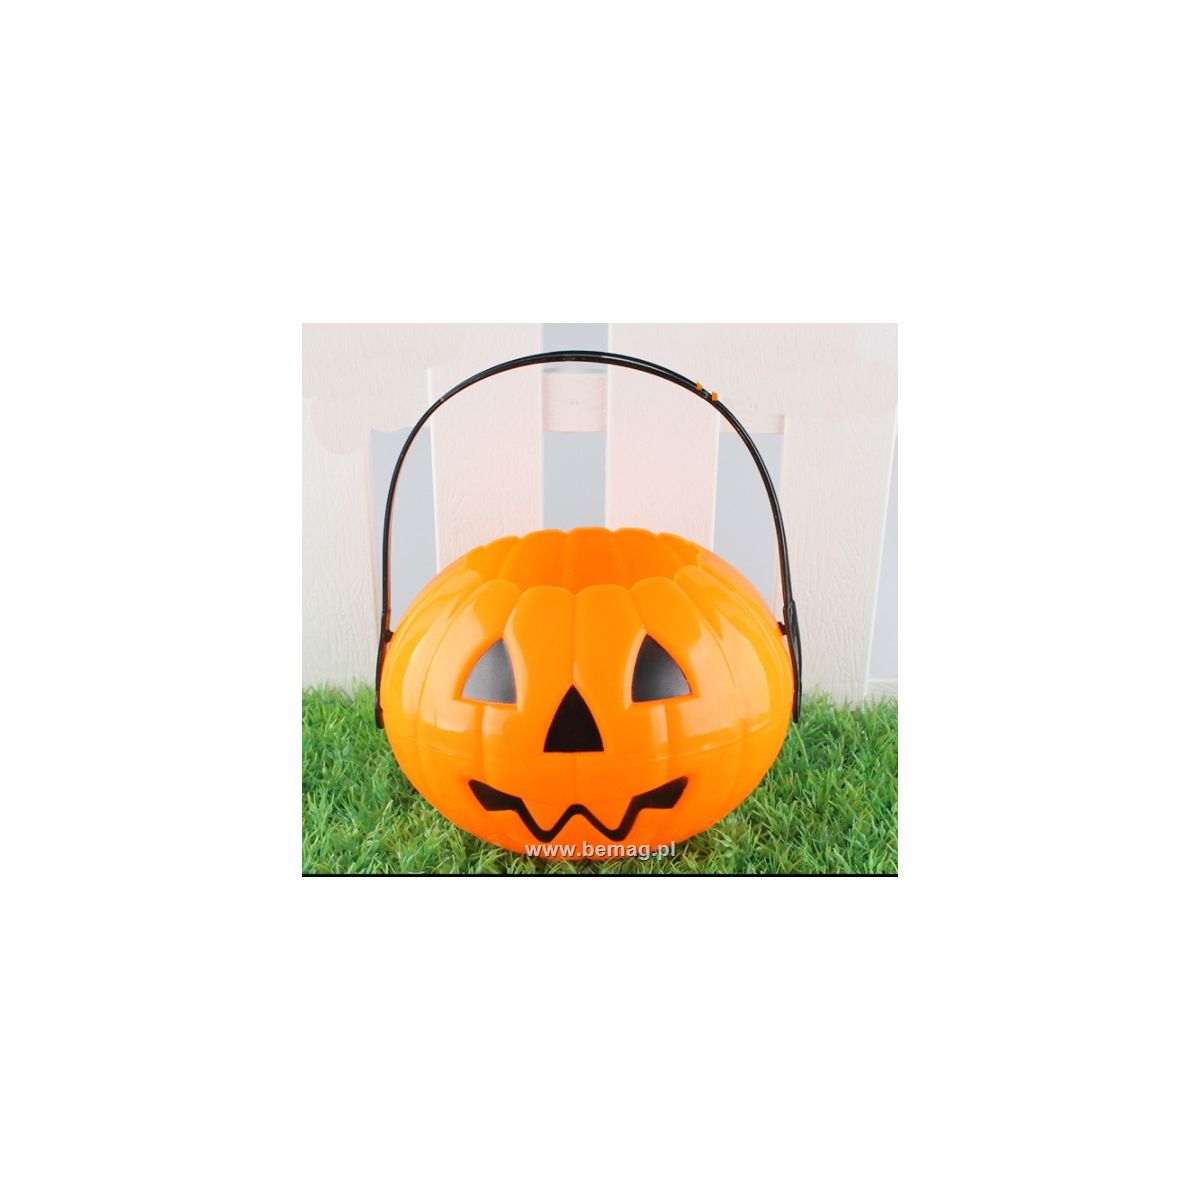 Ozdoba halloweenowa wiaderko dynia Halloween 17x12cm Bemag (HL-100)